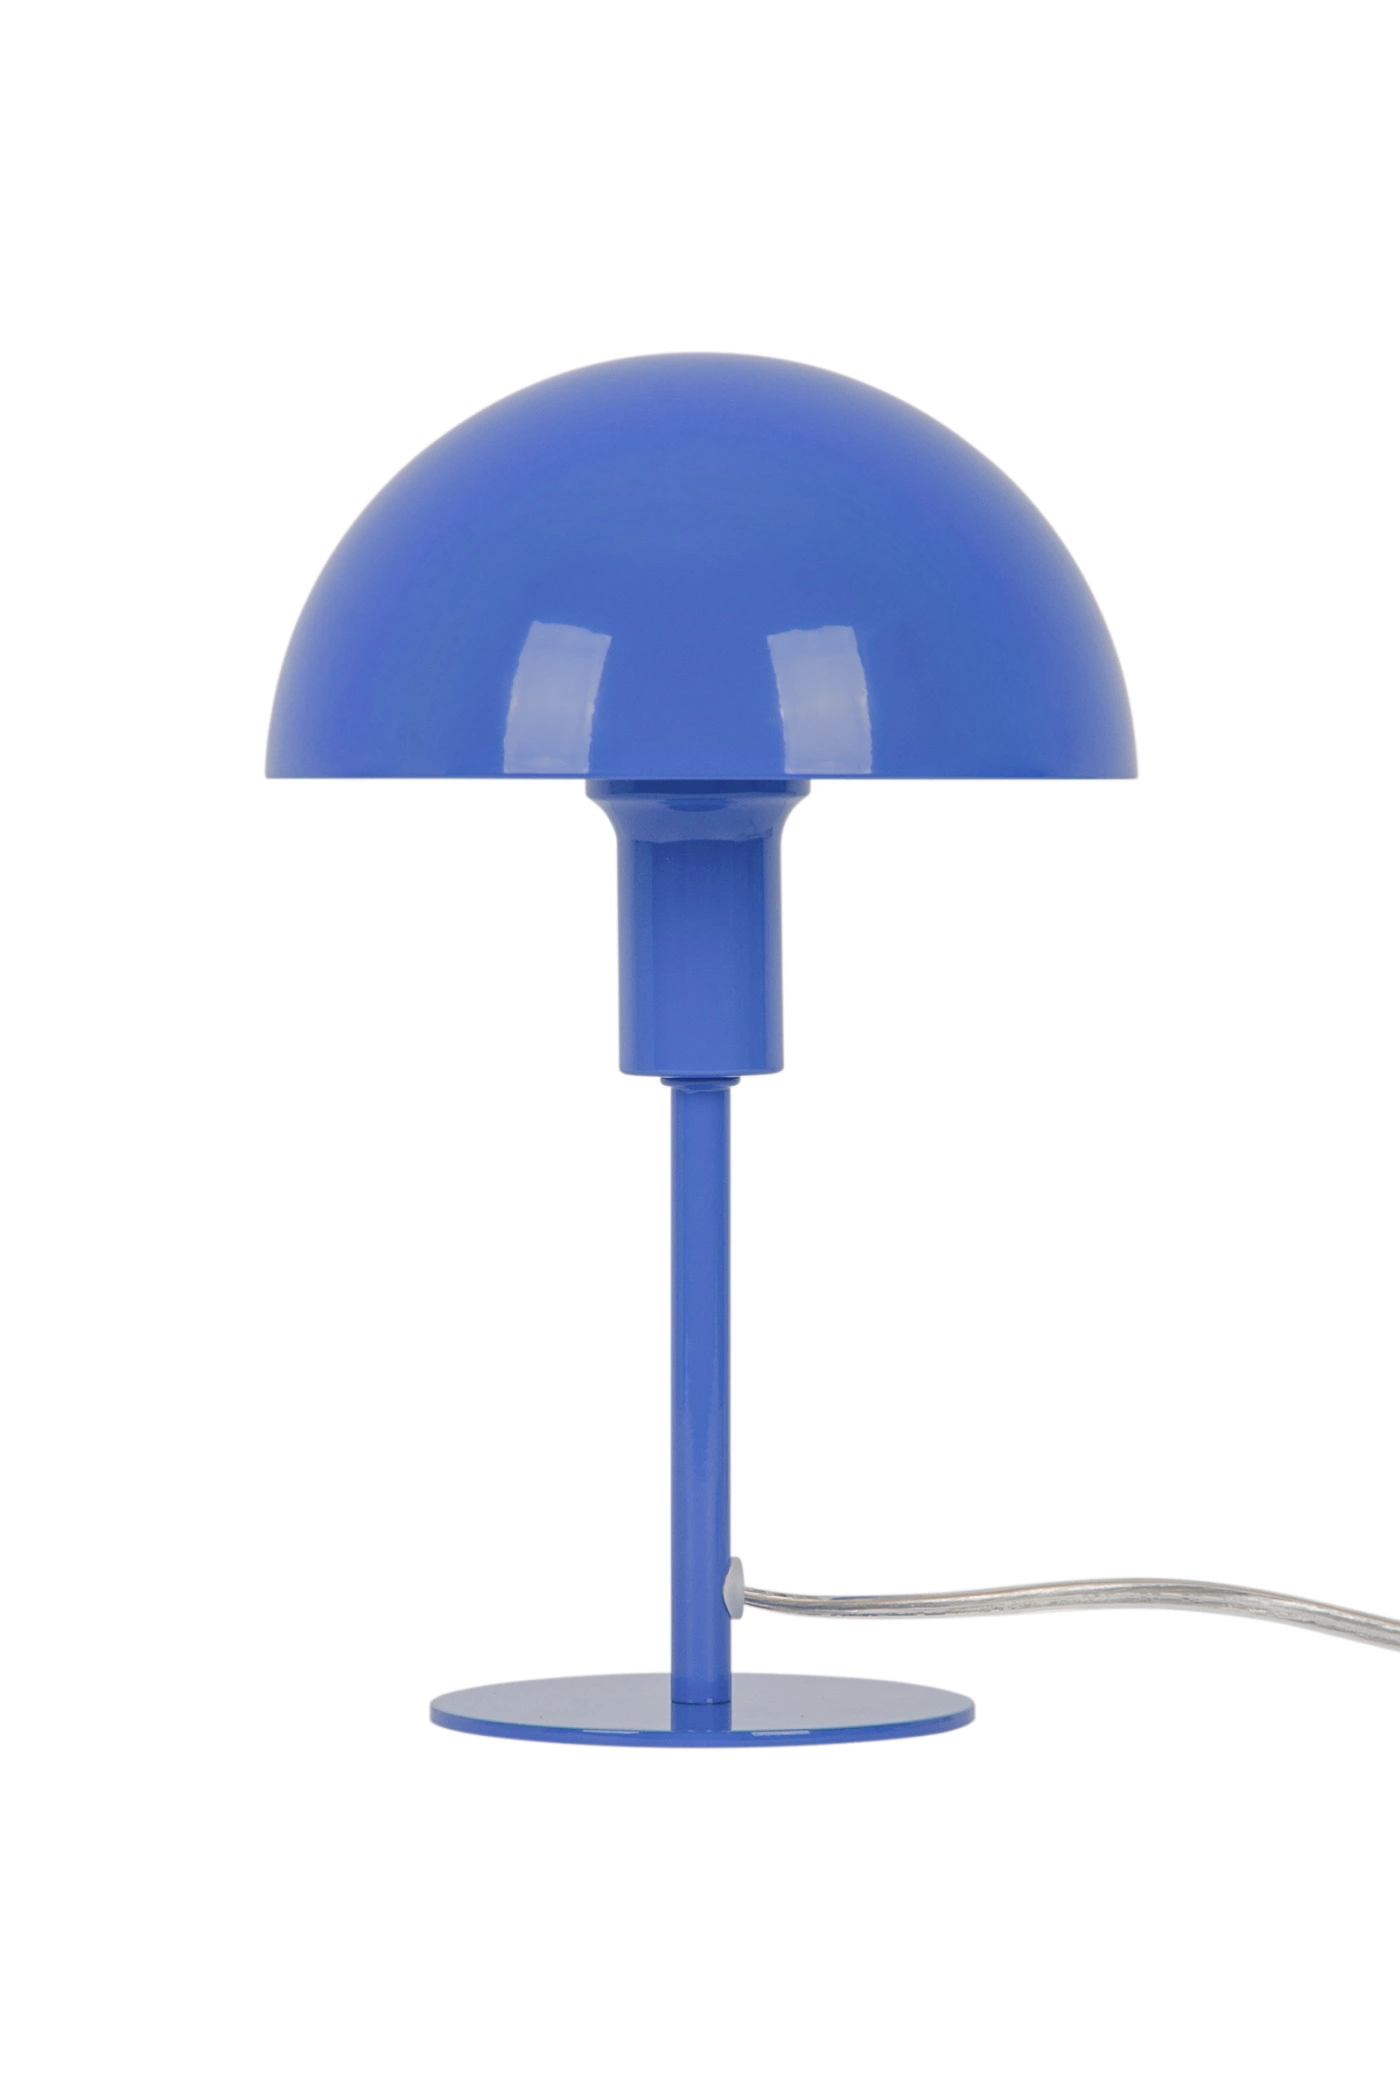   
                        
                        Настольная лампа NORDLUX (Дания) 53565    
                         в стиле Модерн.  
                        Тип источника света: светодиодная лампа, сменная.                                                 Цвета плафонов и подвесок: Синий.                         Материал: Пластик.                          фото 1